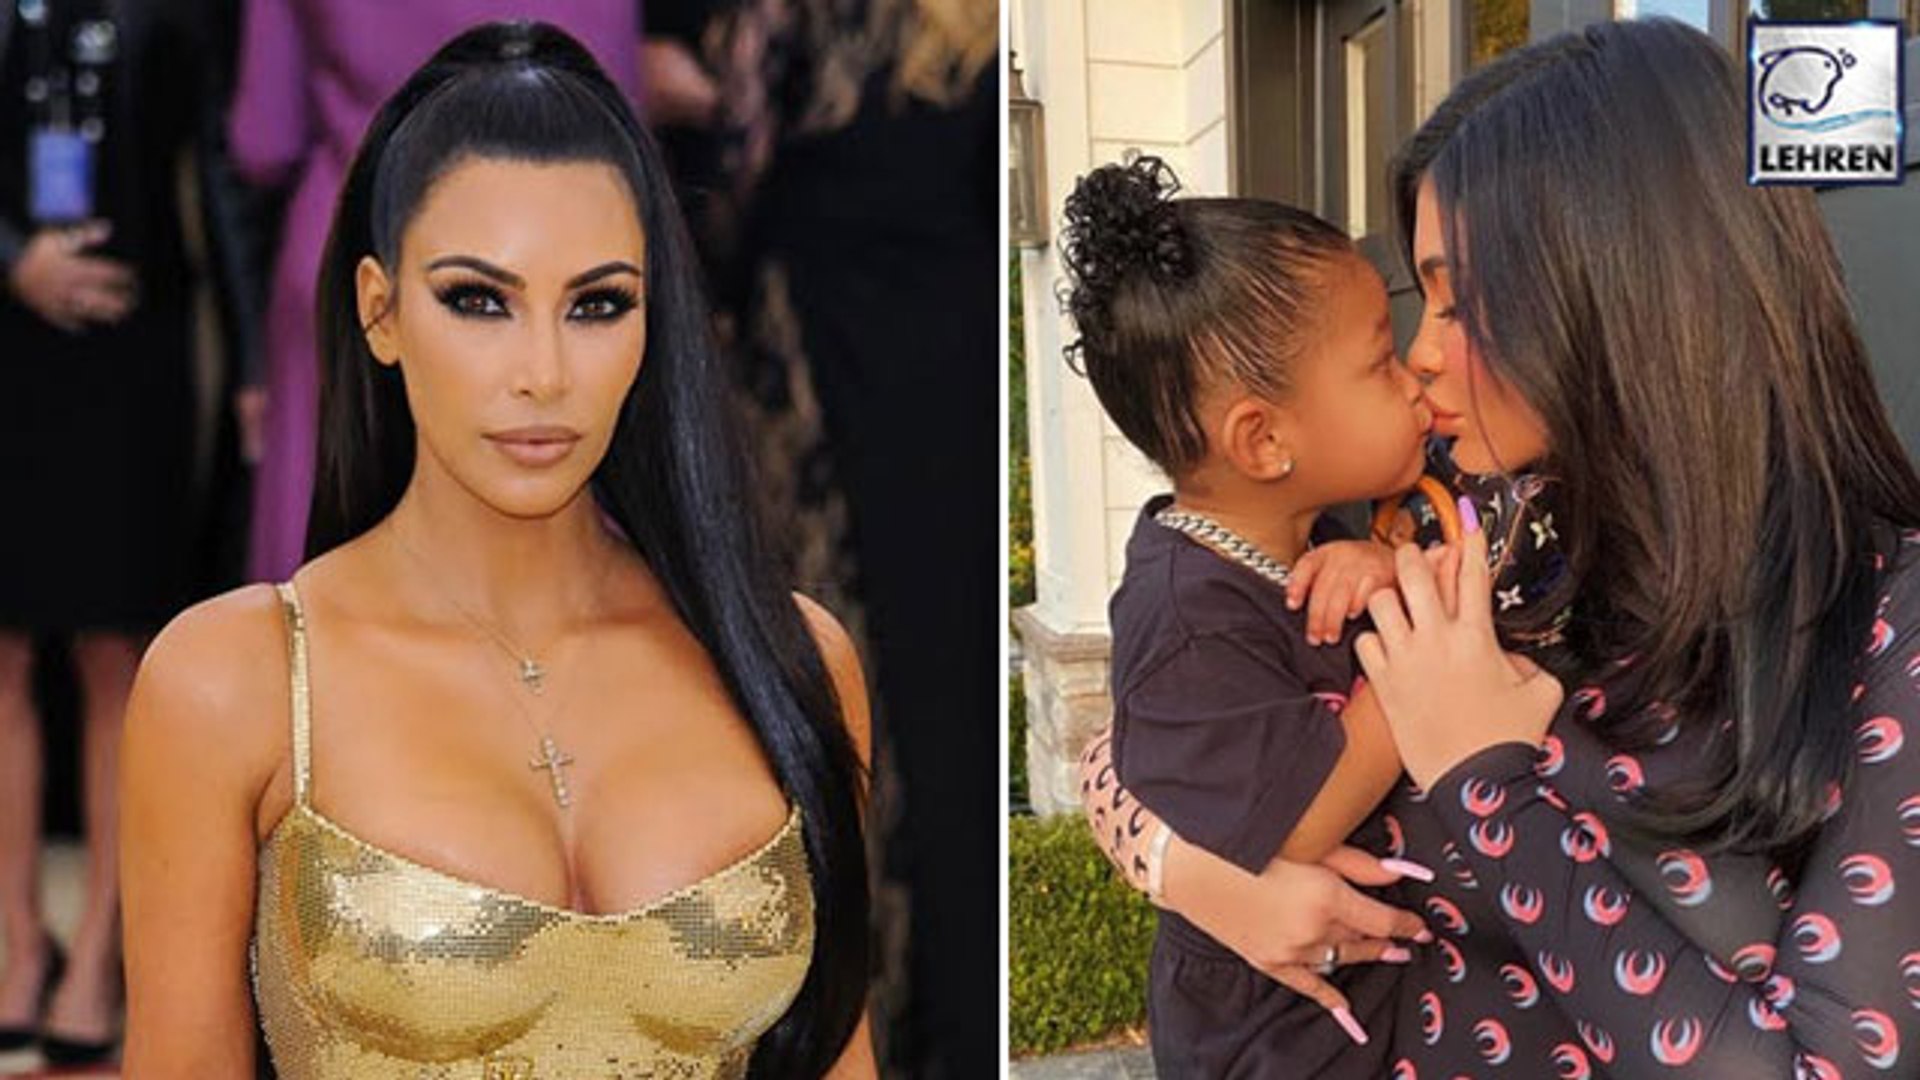 Kylie Jenner Tells Kim Kardashian She Wants More Kids After Stormi